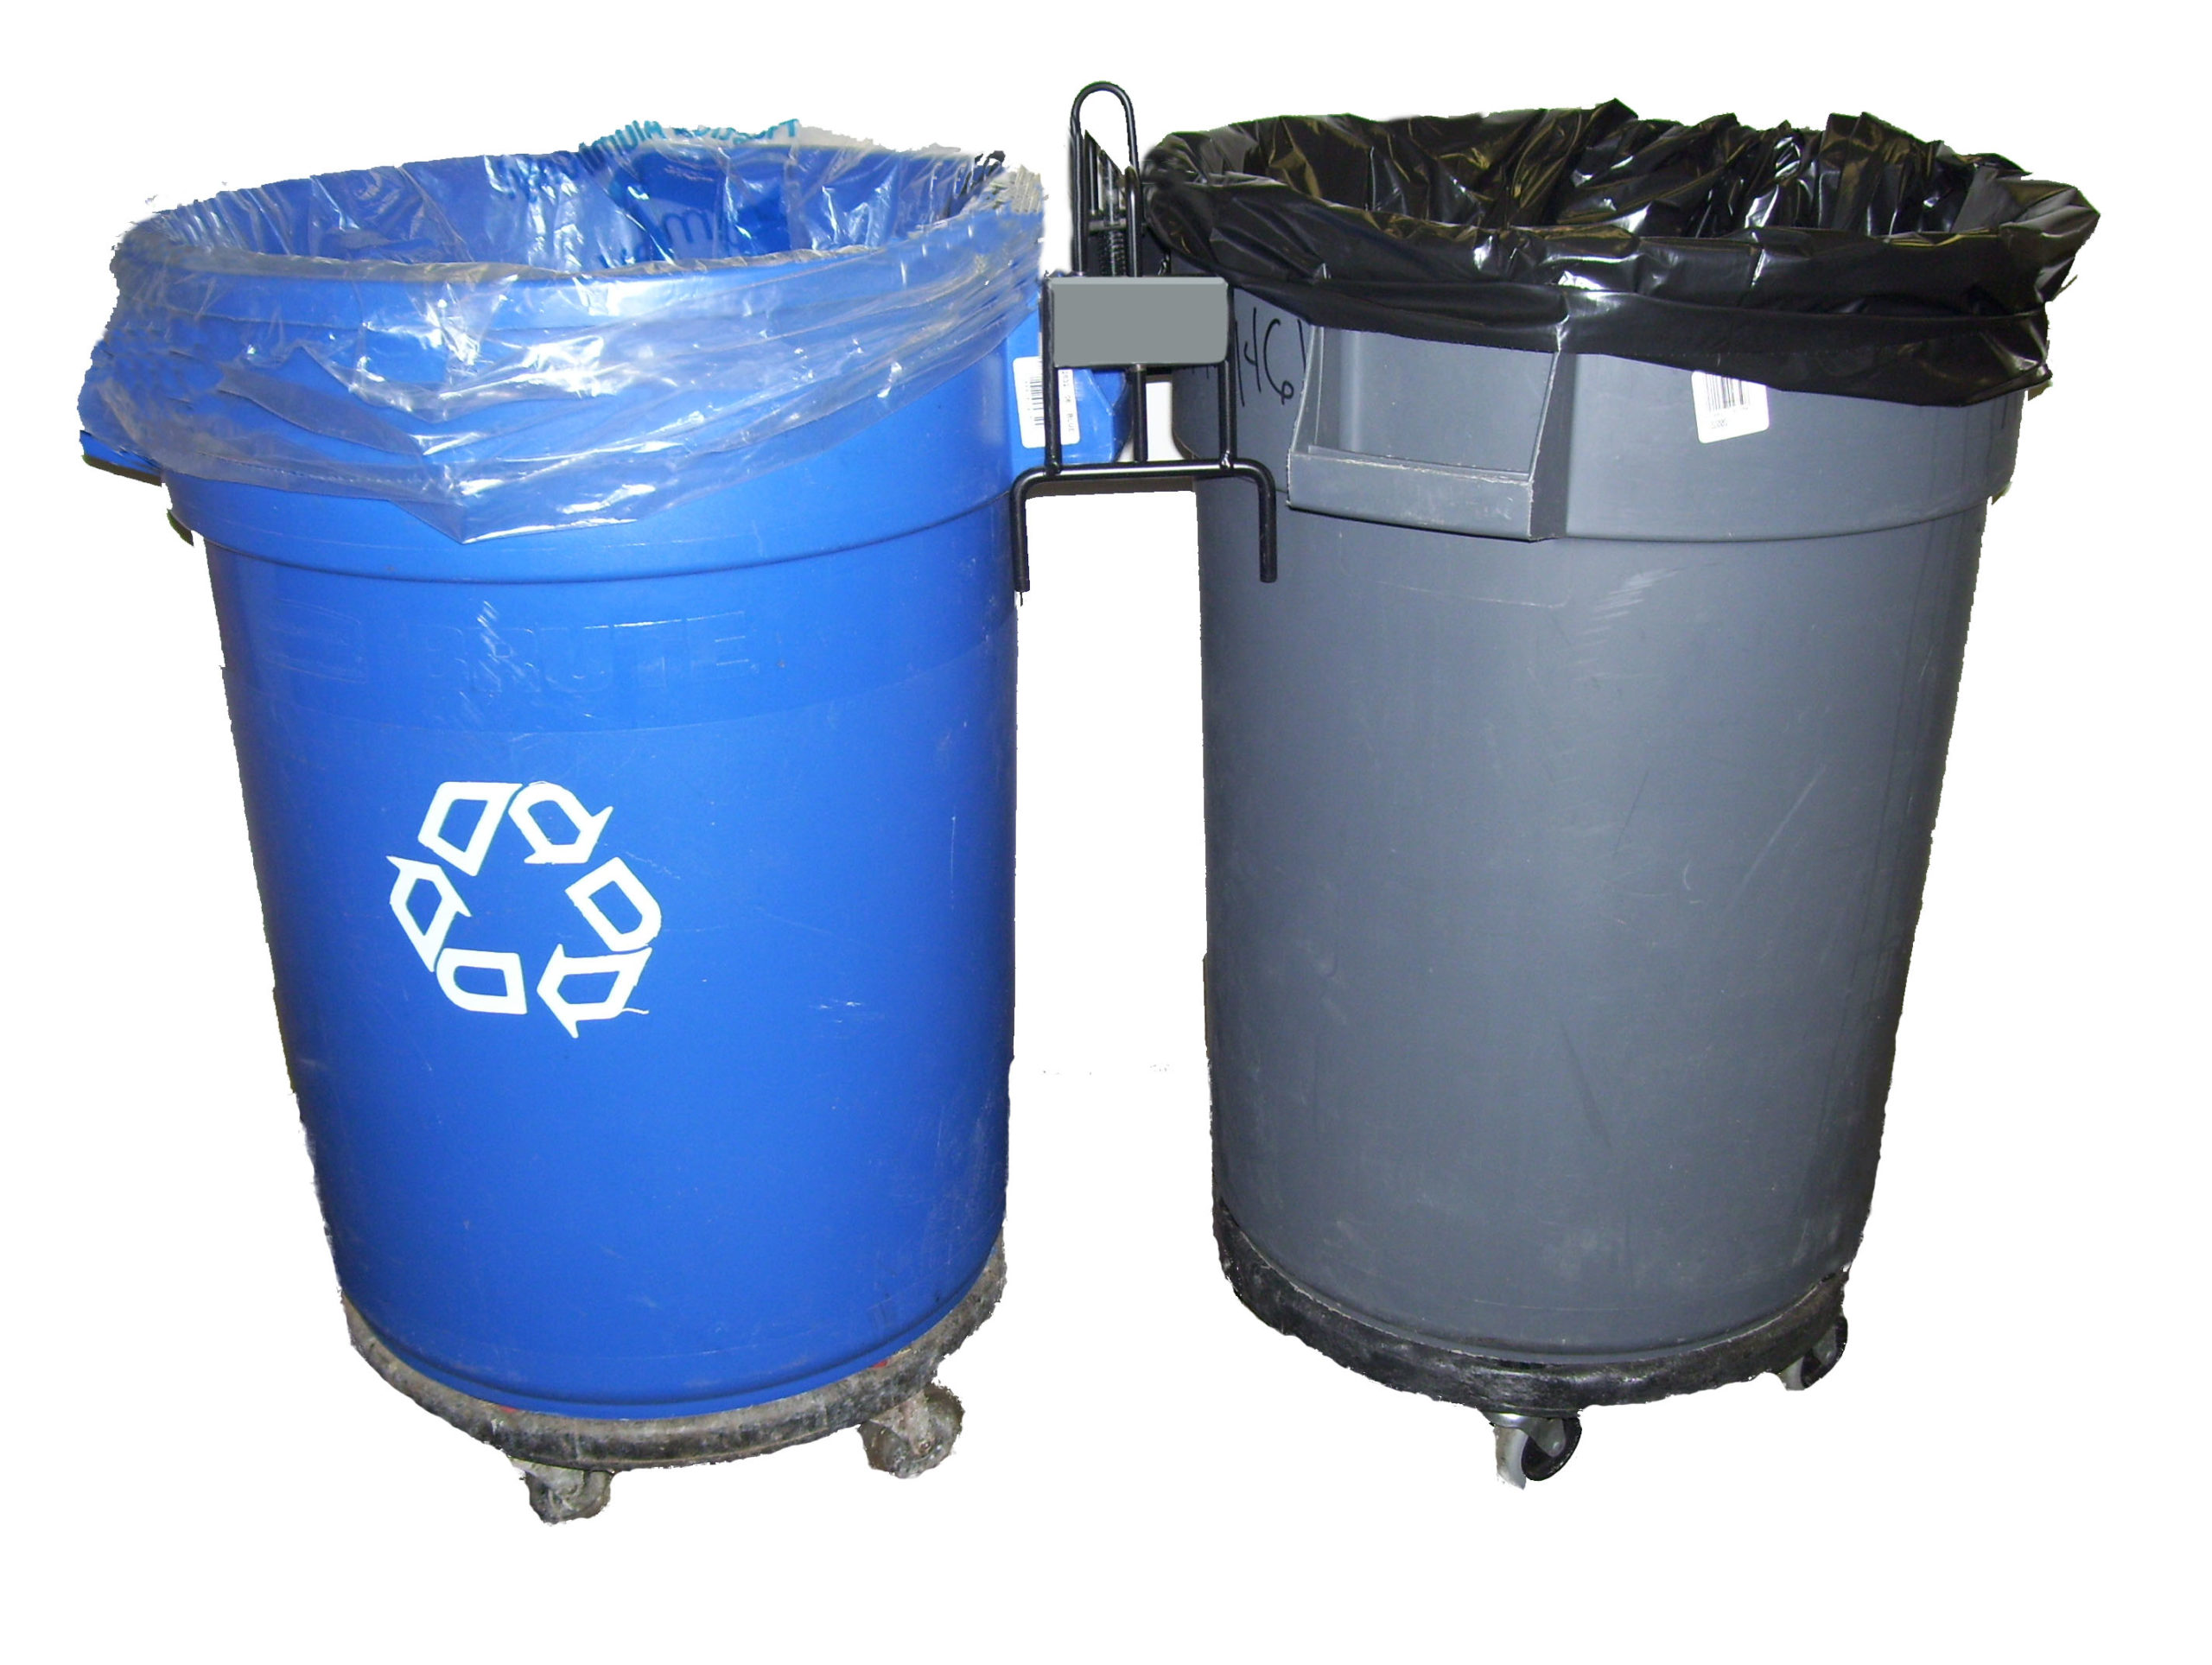 Round blue recycling bin and grey round waste bin